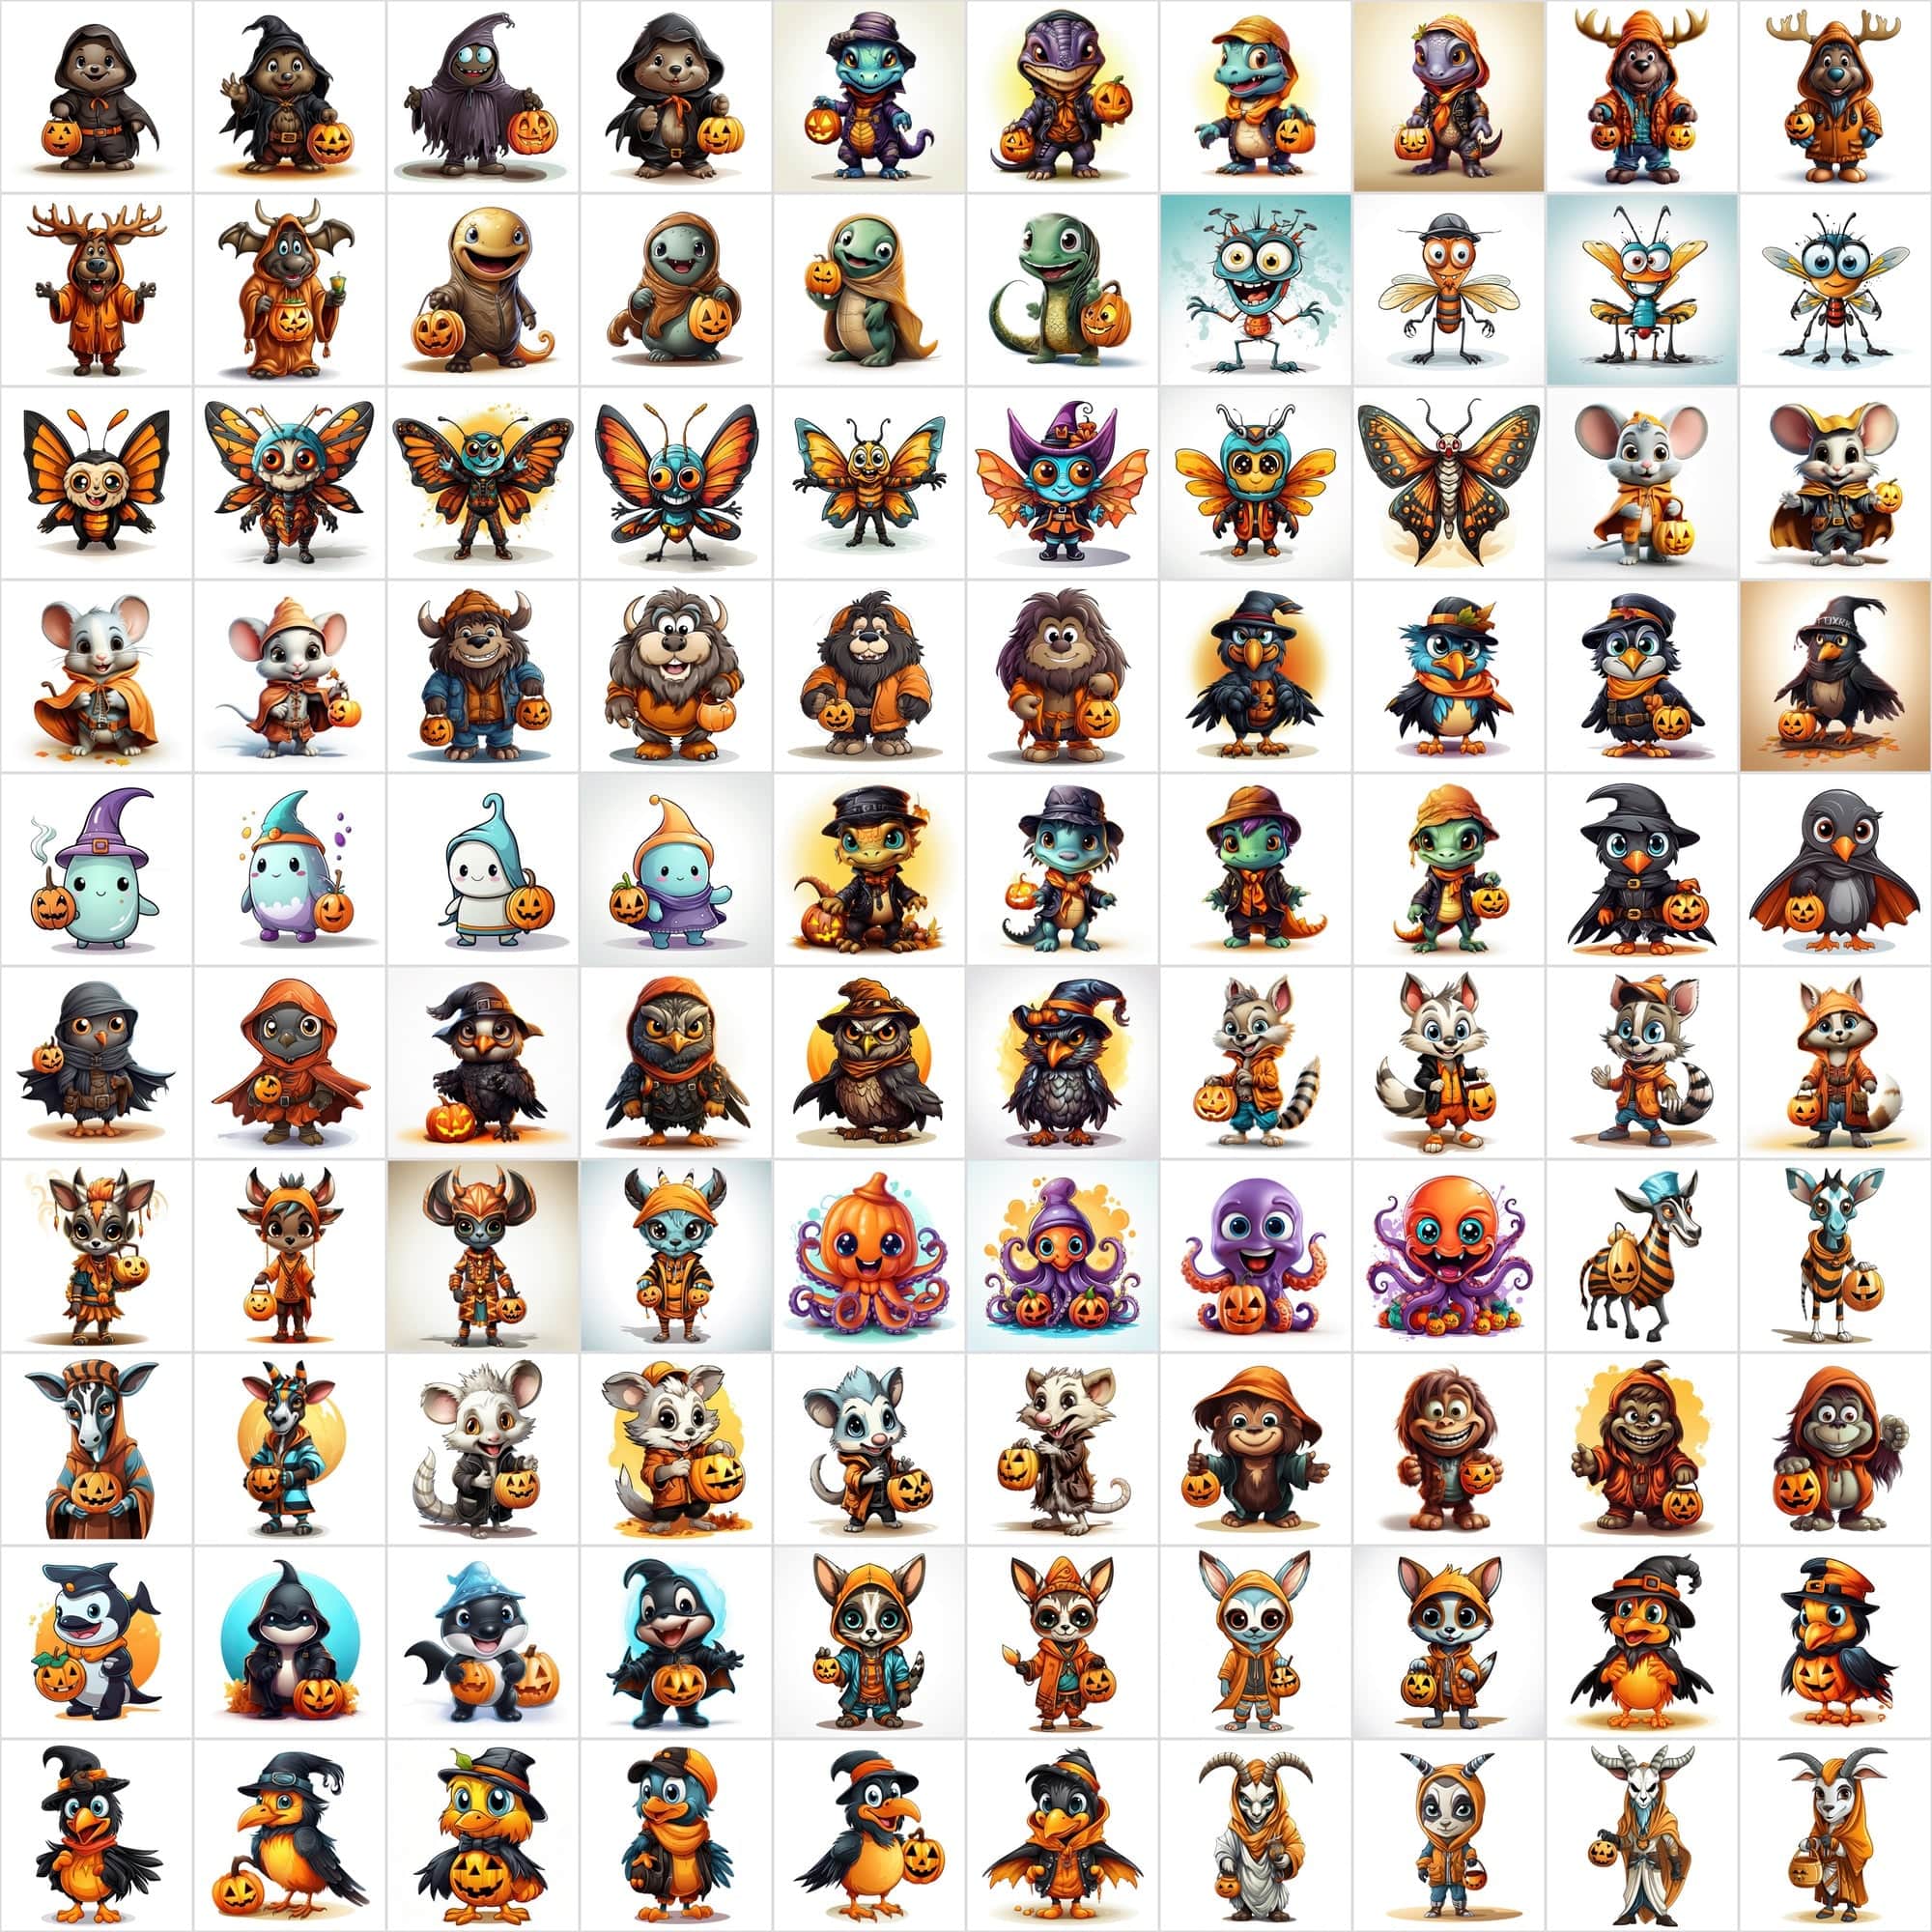 Halloween Animal Graphics: 1080 Colored Animals, Commercial License, Digital Download Sumobundle